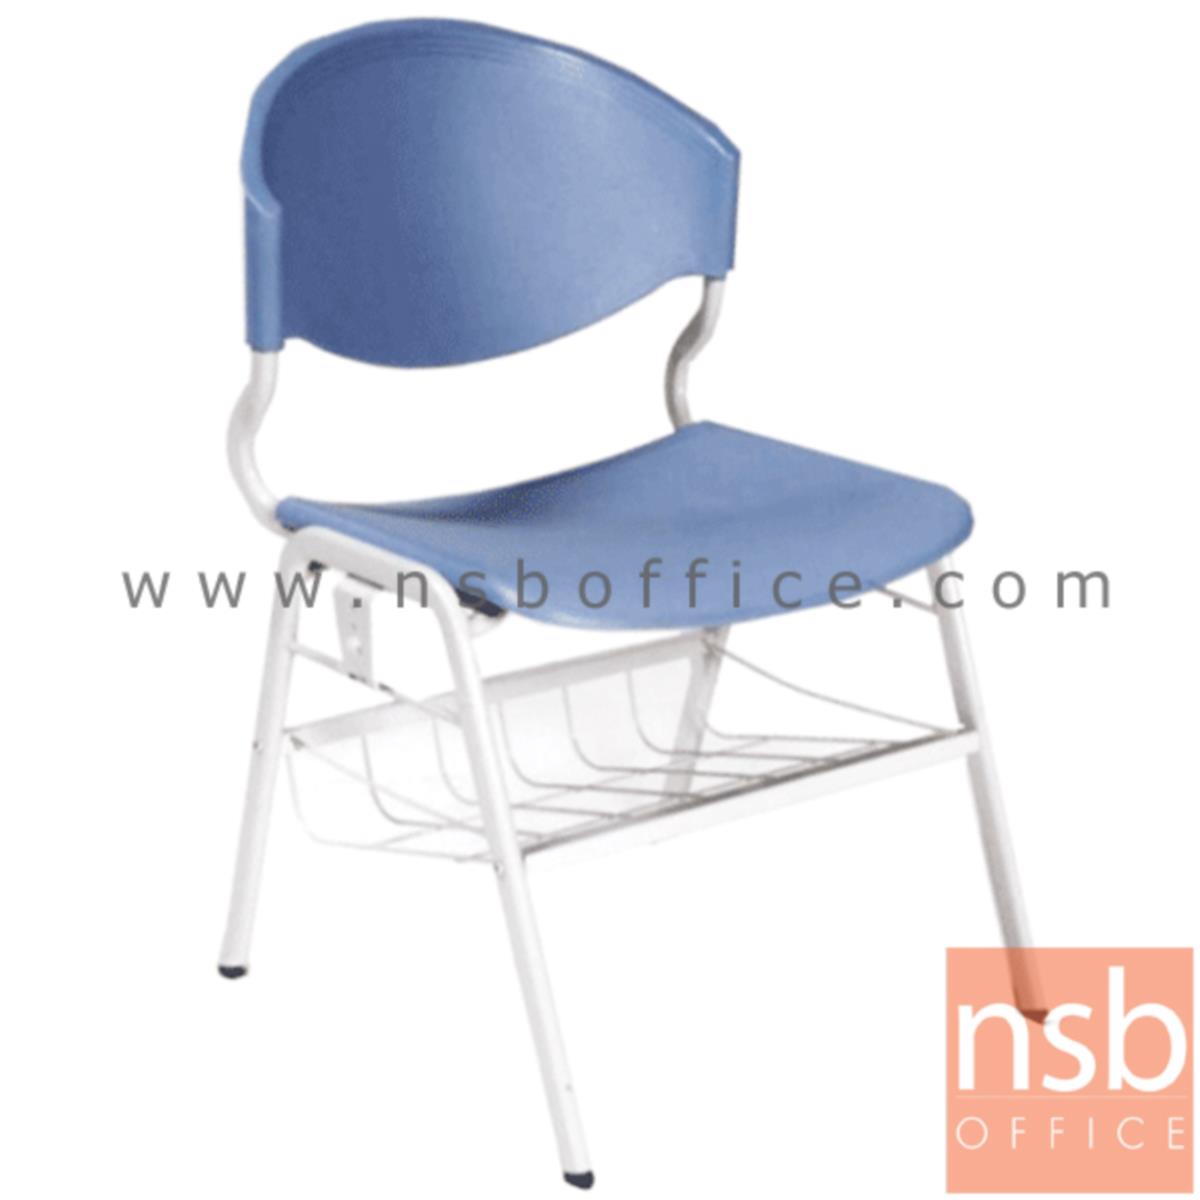 B05A034:เก้าอี้อเนกประสงค์เฟรมโพลี่ รุ่น TD-780  มีตะแกรงล่าง มีที่เกี่ยวด้านข้าง ขาเหล็ก